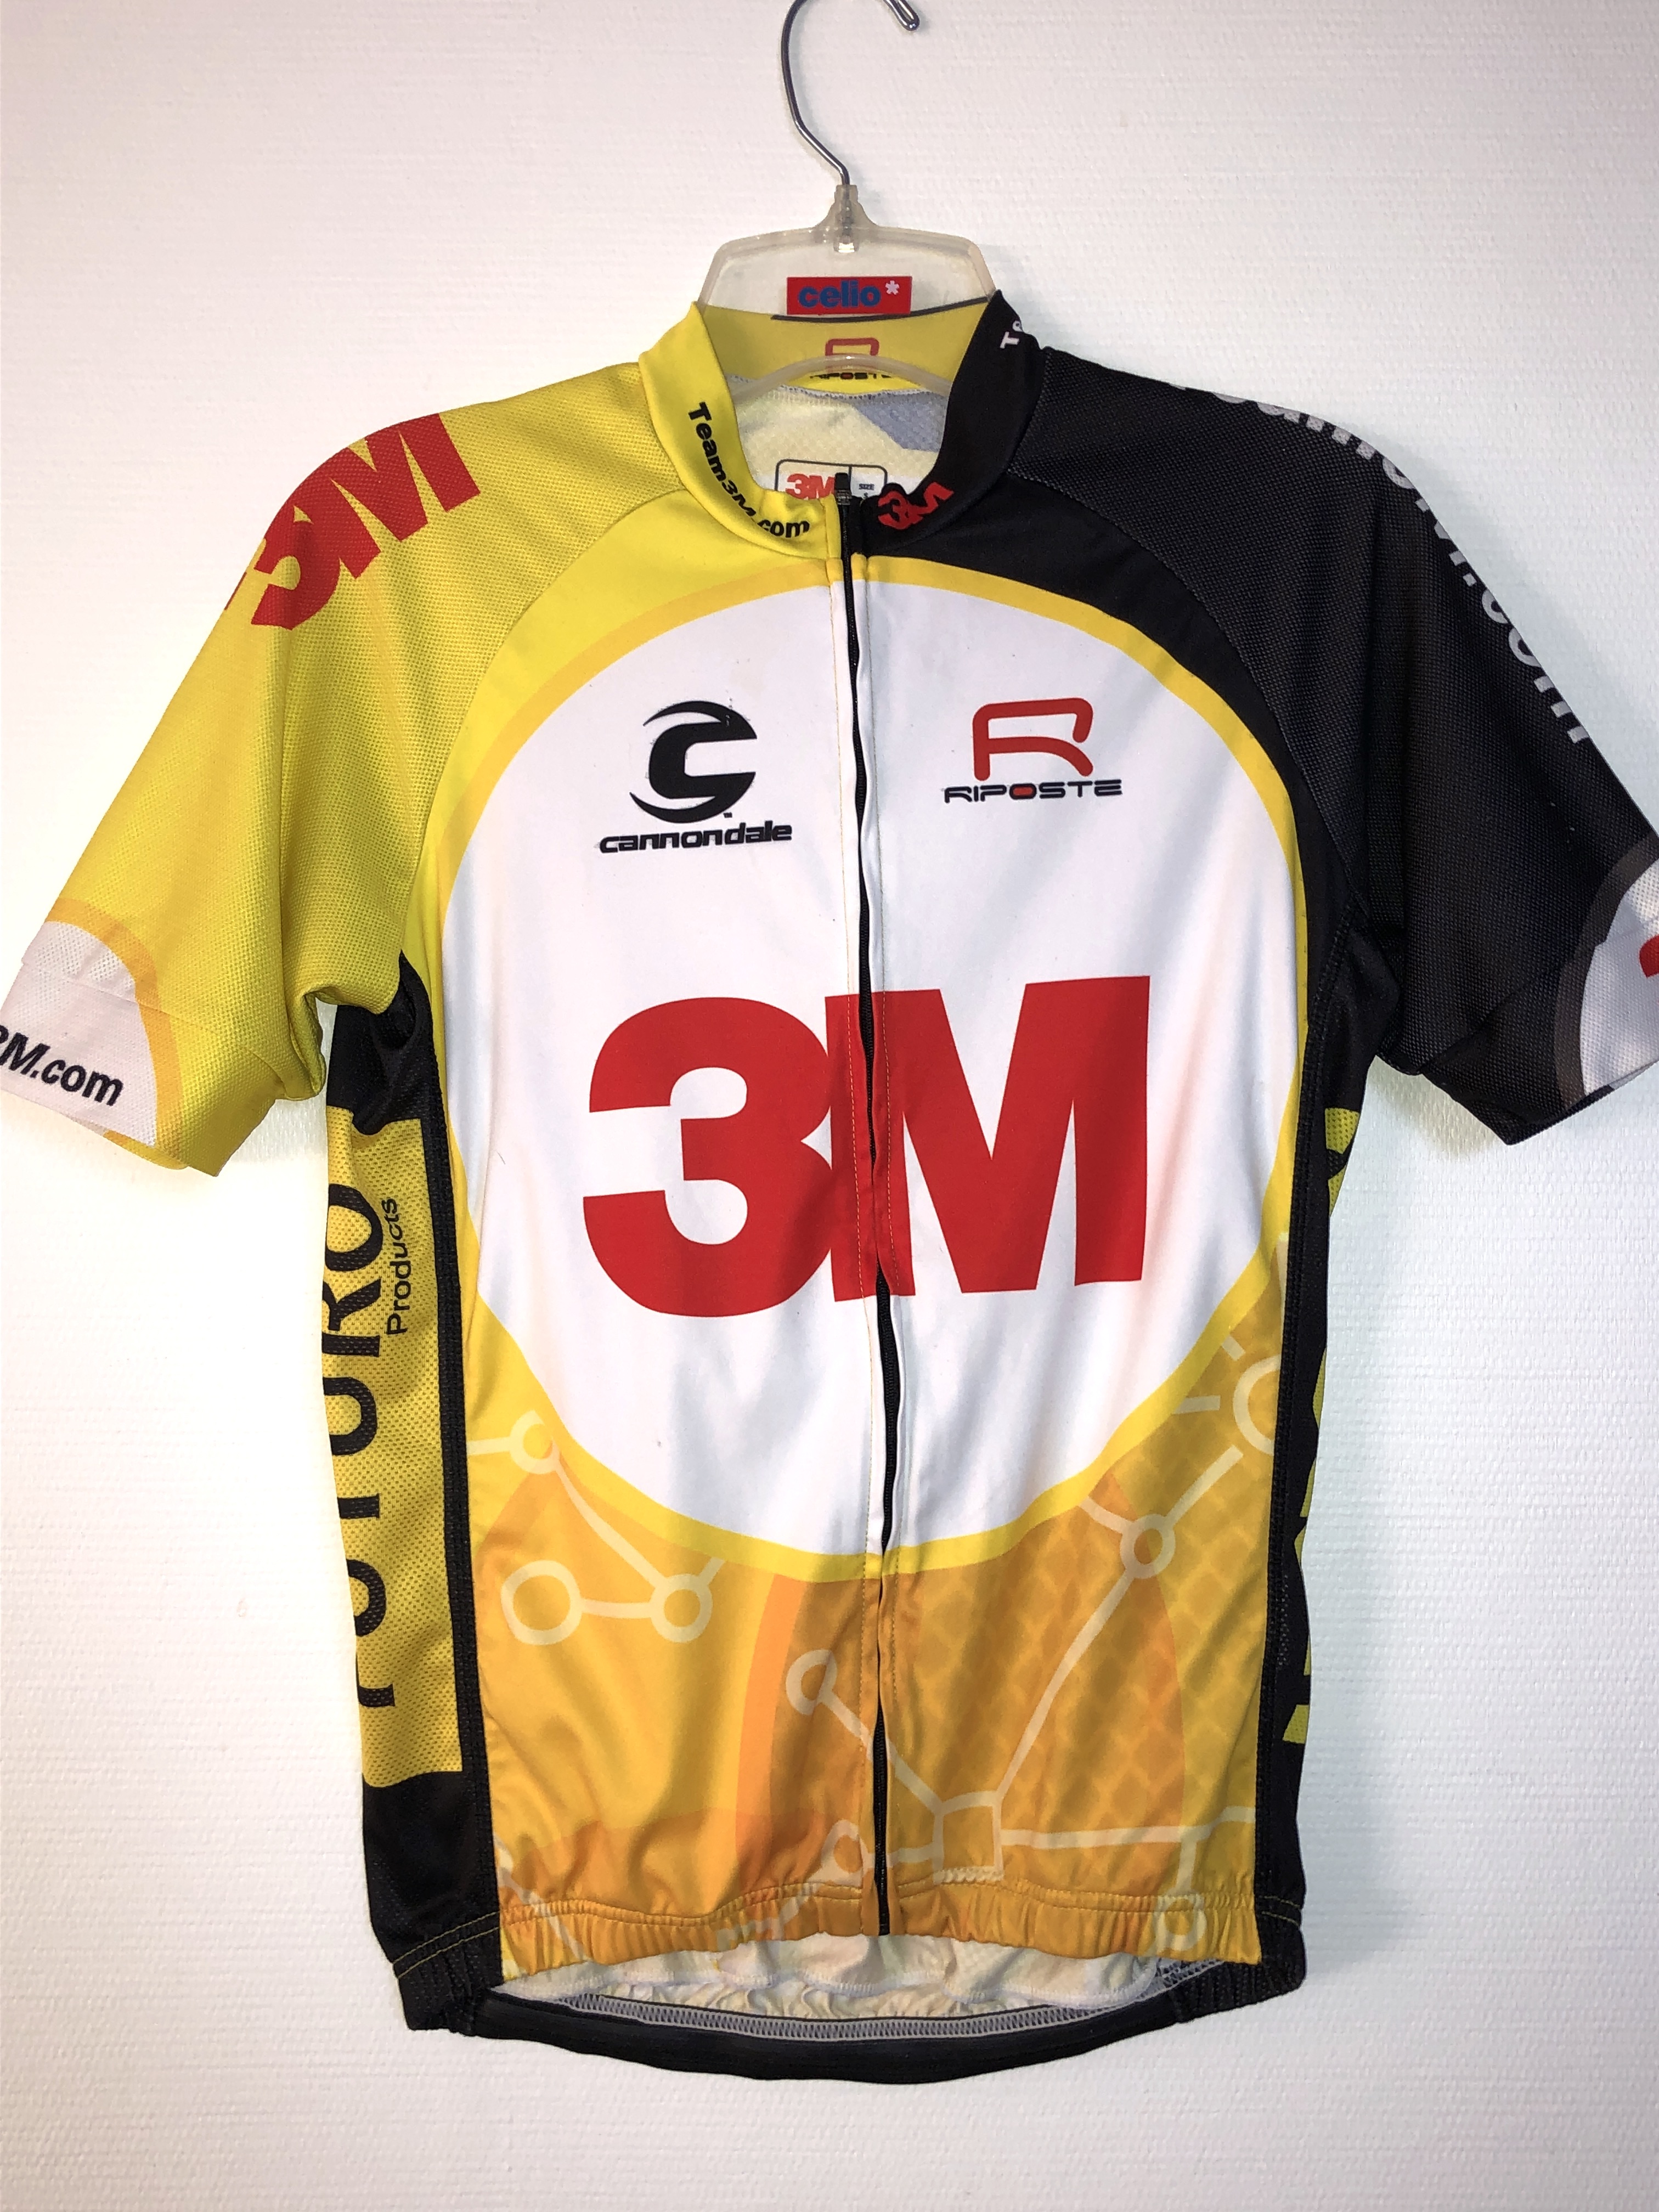 3 M Cycling Team - 2014